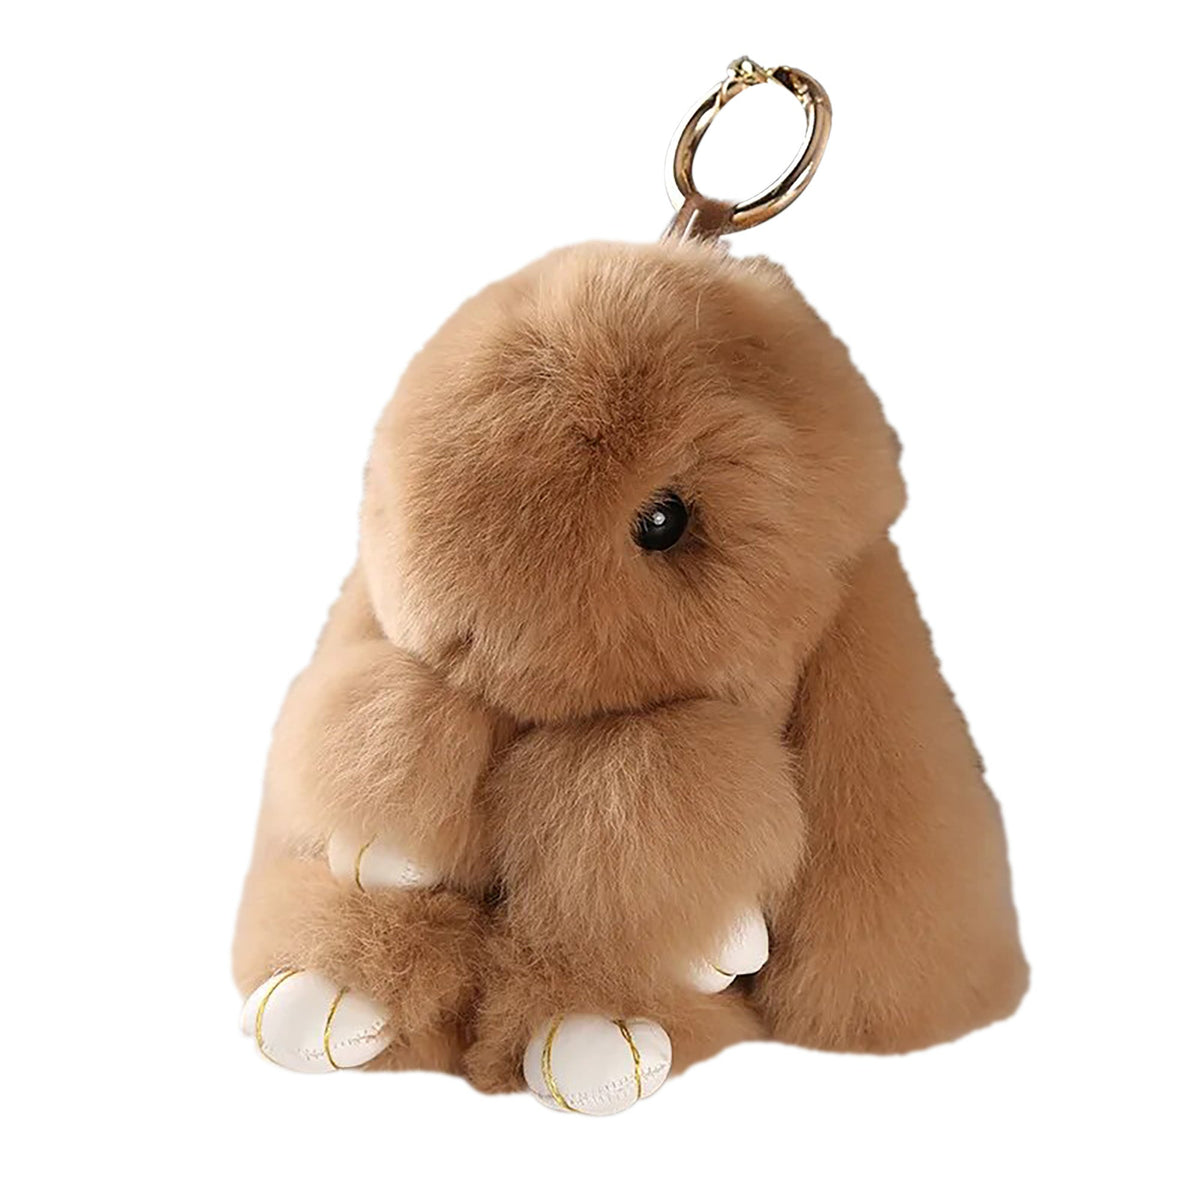 Shenzhen Huiboxin Electronics Co. Ltd Impulse Buying Brown Fluffy Bunny Plush Keychain, 1 Count